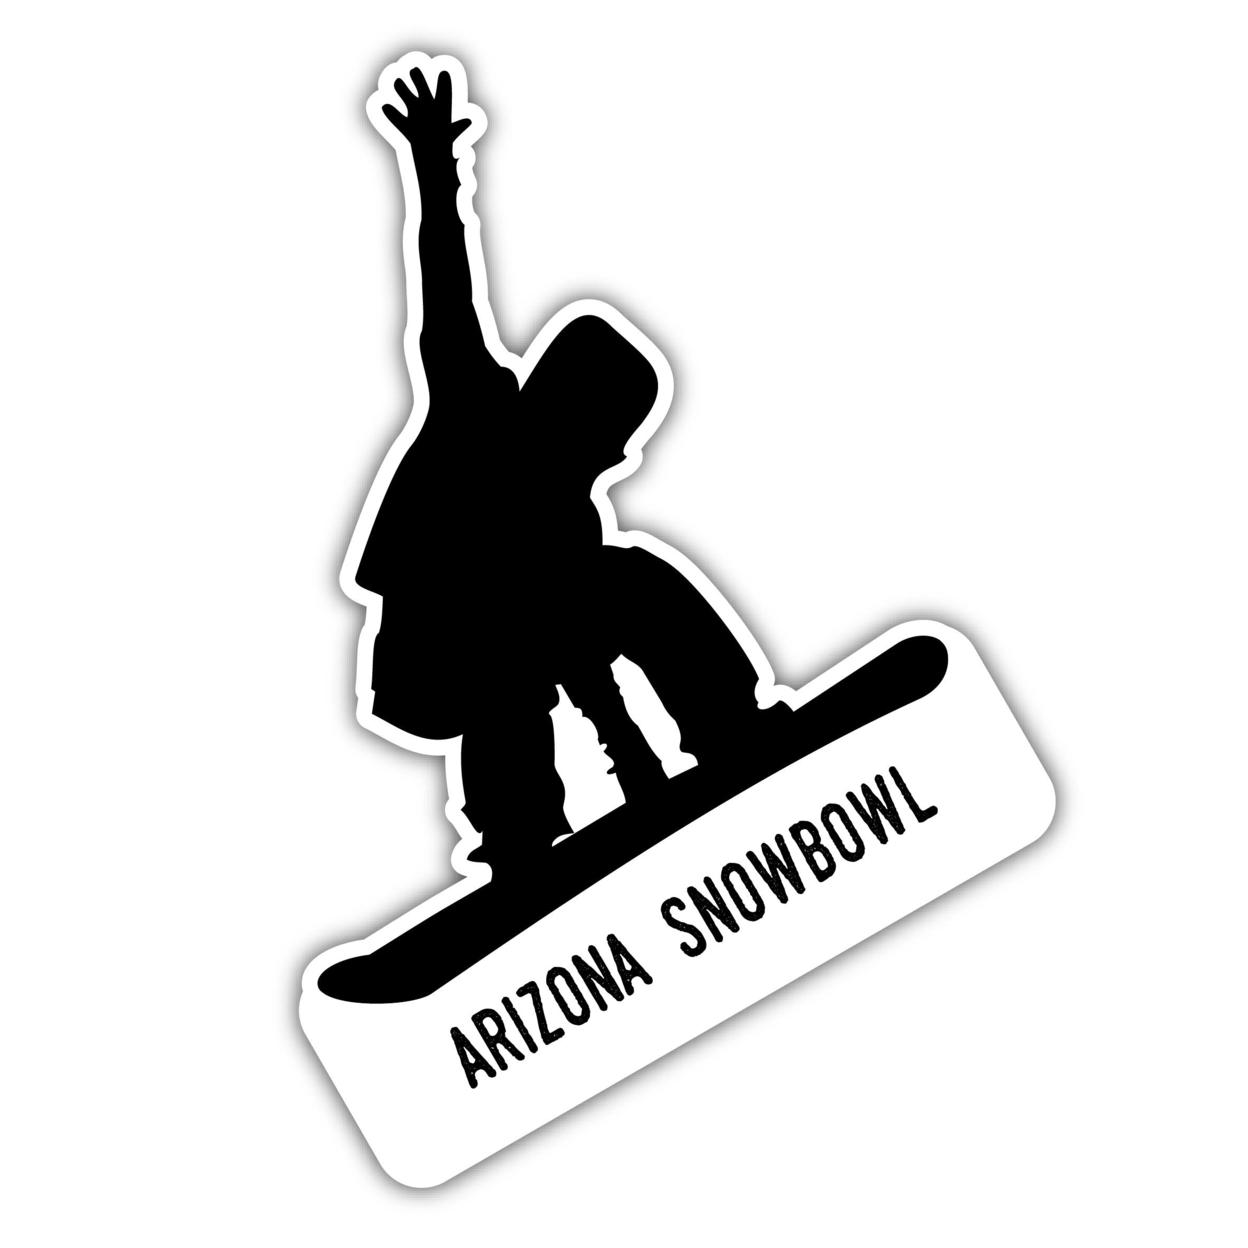 Arizona Snowbowl Arizona Ski Adventures Souvenir 4 Inch Vinyl Decal Sticker Board Design